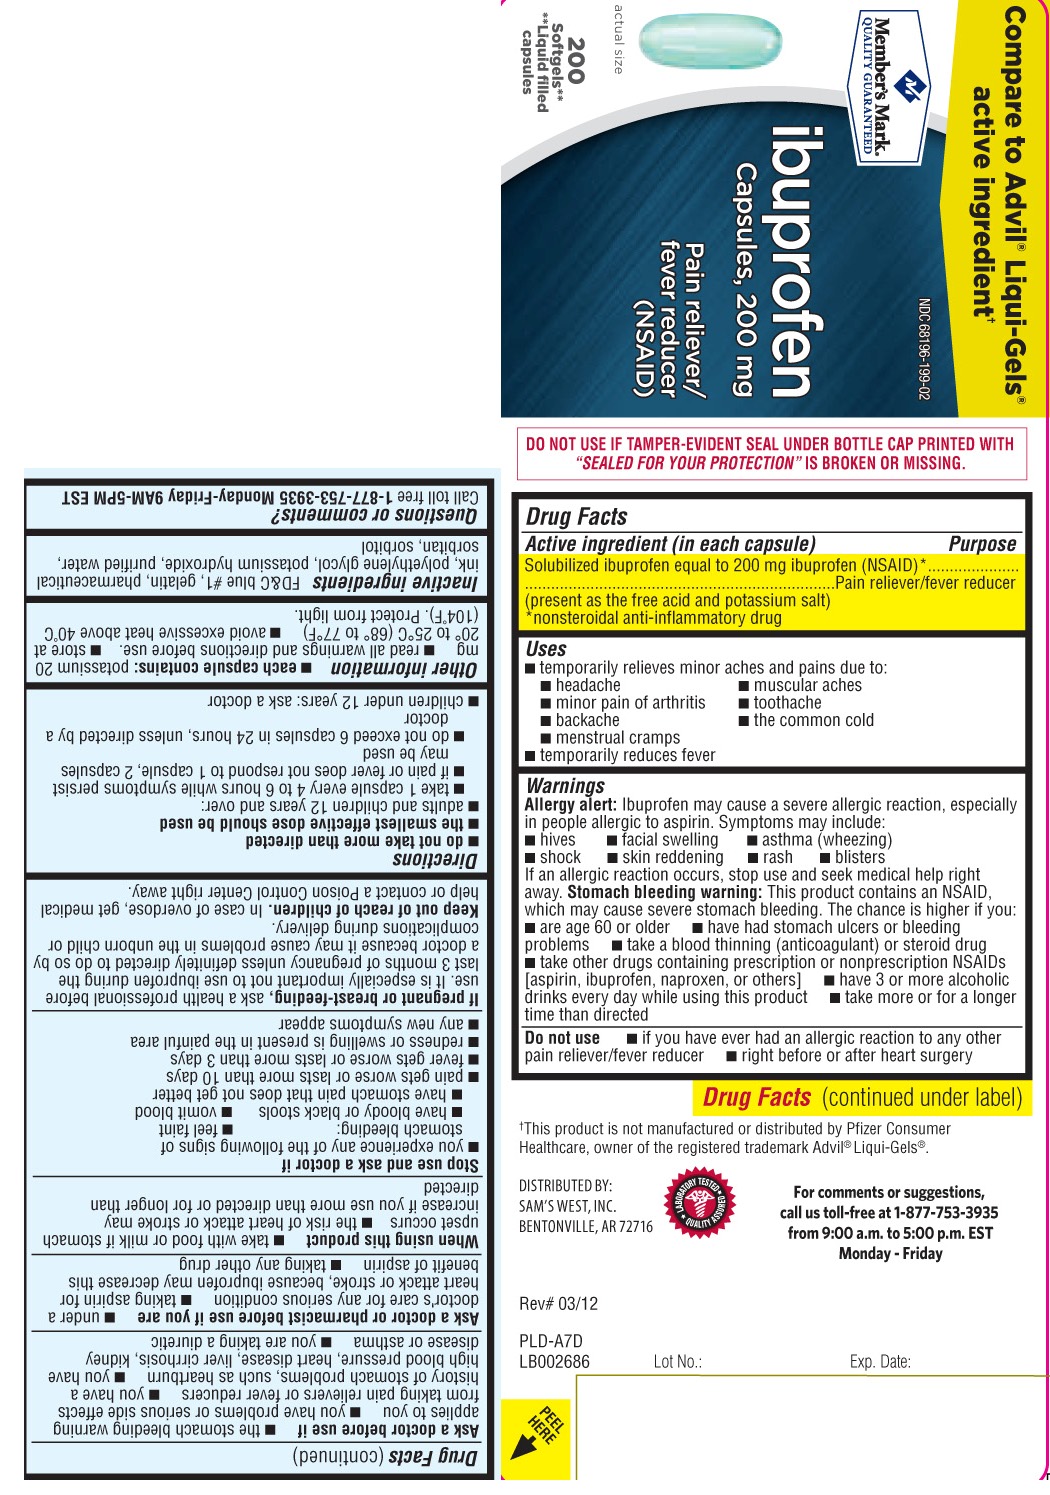 Solubilized ibuprofen equal to 200mg ibuprofen (NSAID)* (present as the free acid and potassium salt) *nonsteroidal anti-inflammatory drug